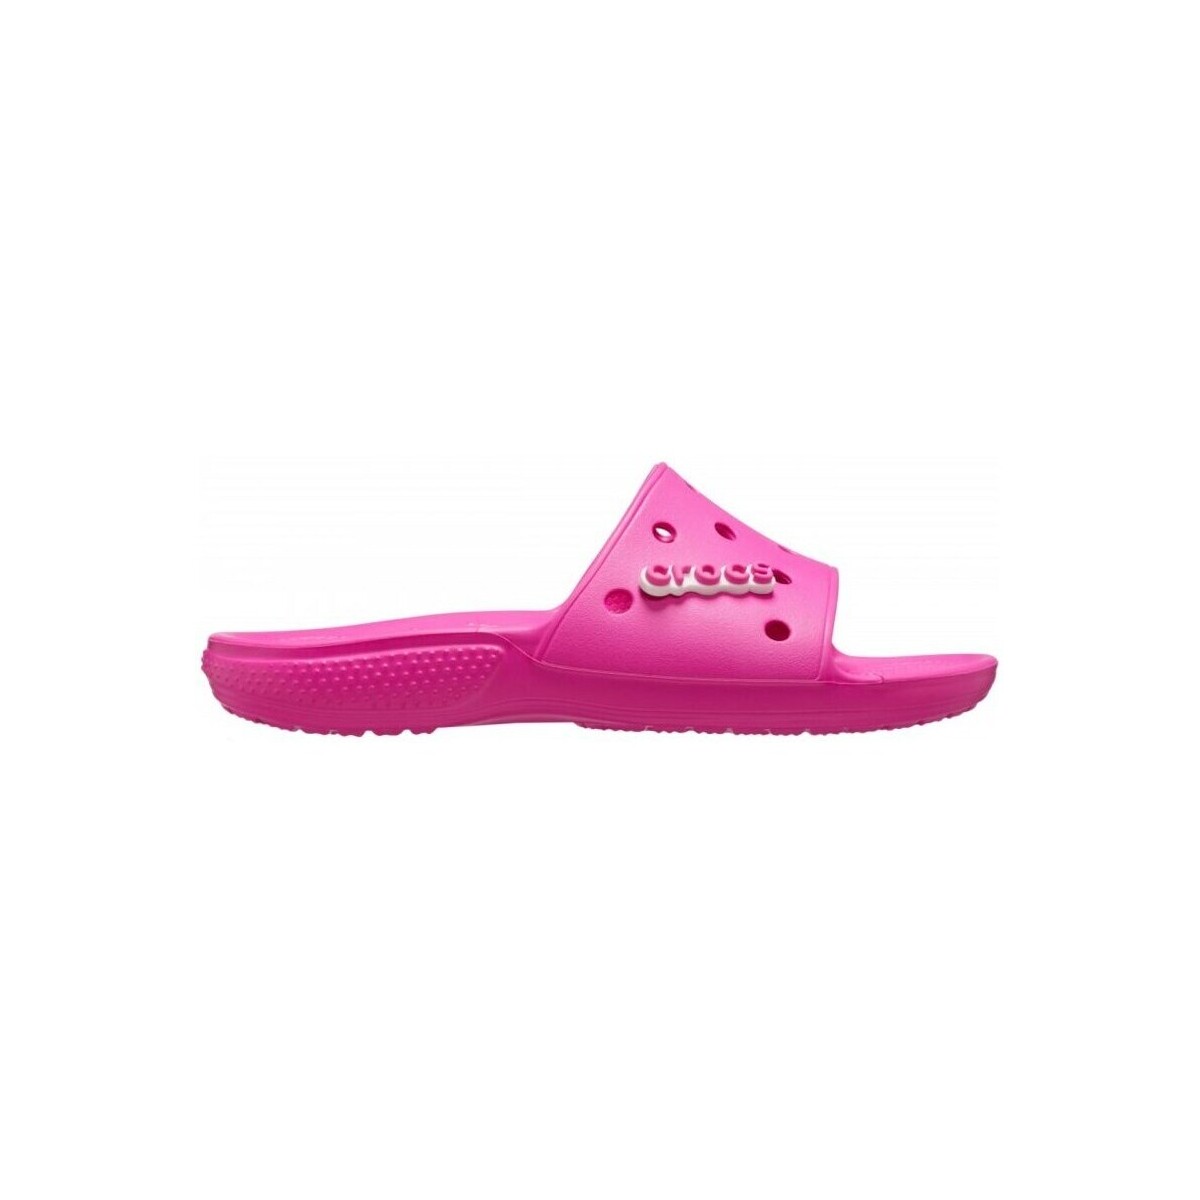 Schuhe Damen Zehensandalen Crocs Classic Slide Rosa